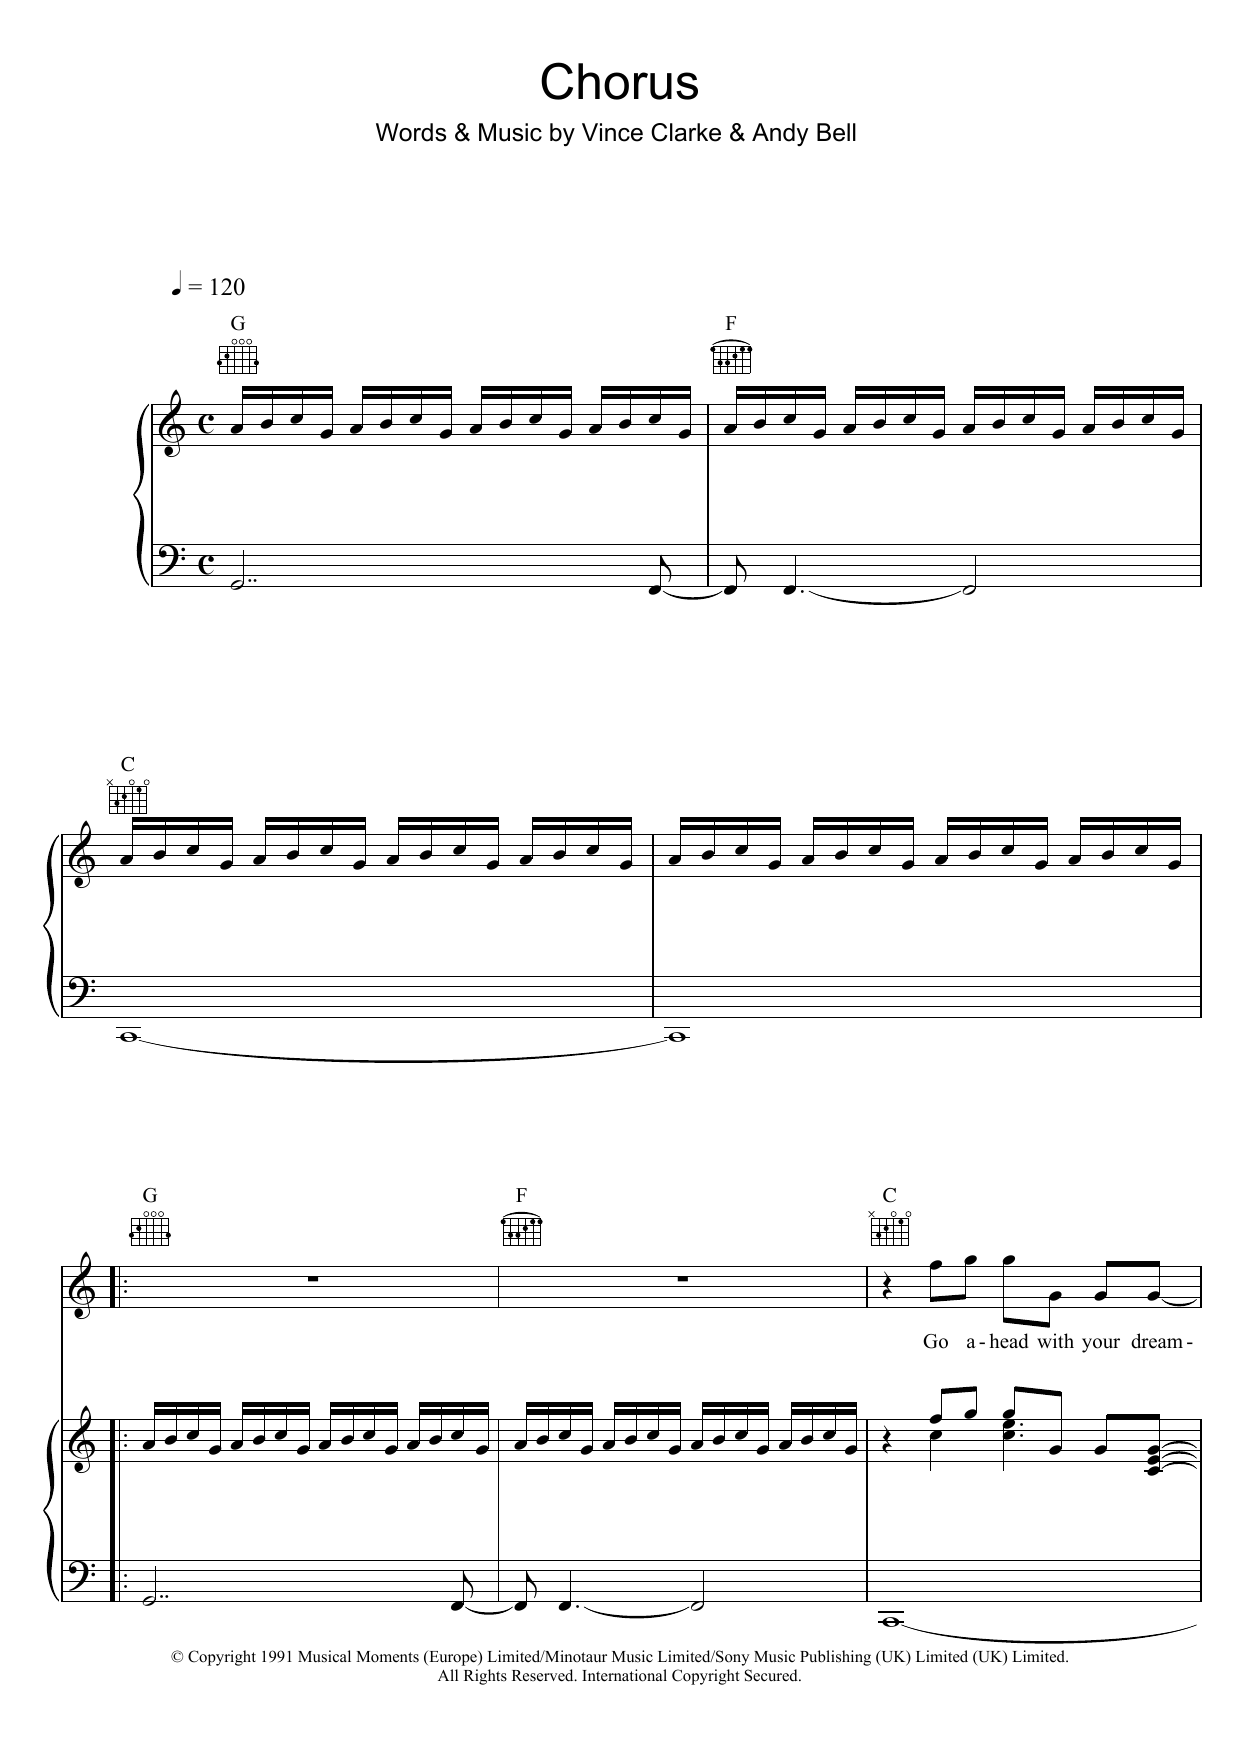 Erasure Chorus sheet music notes and chords arranged for Piano, Vocal & Guitar Chords